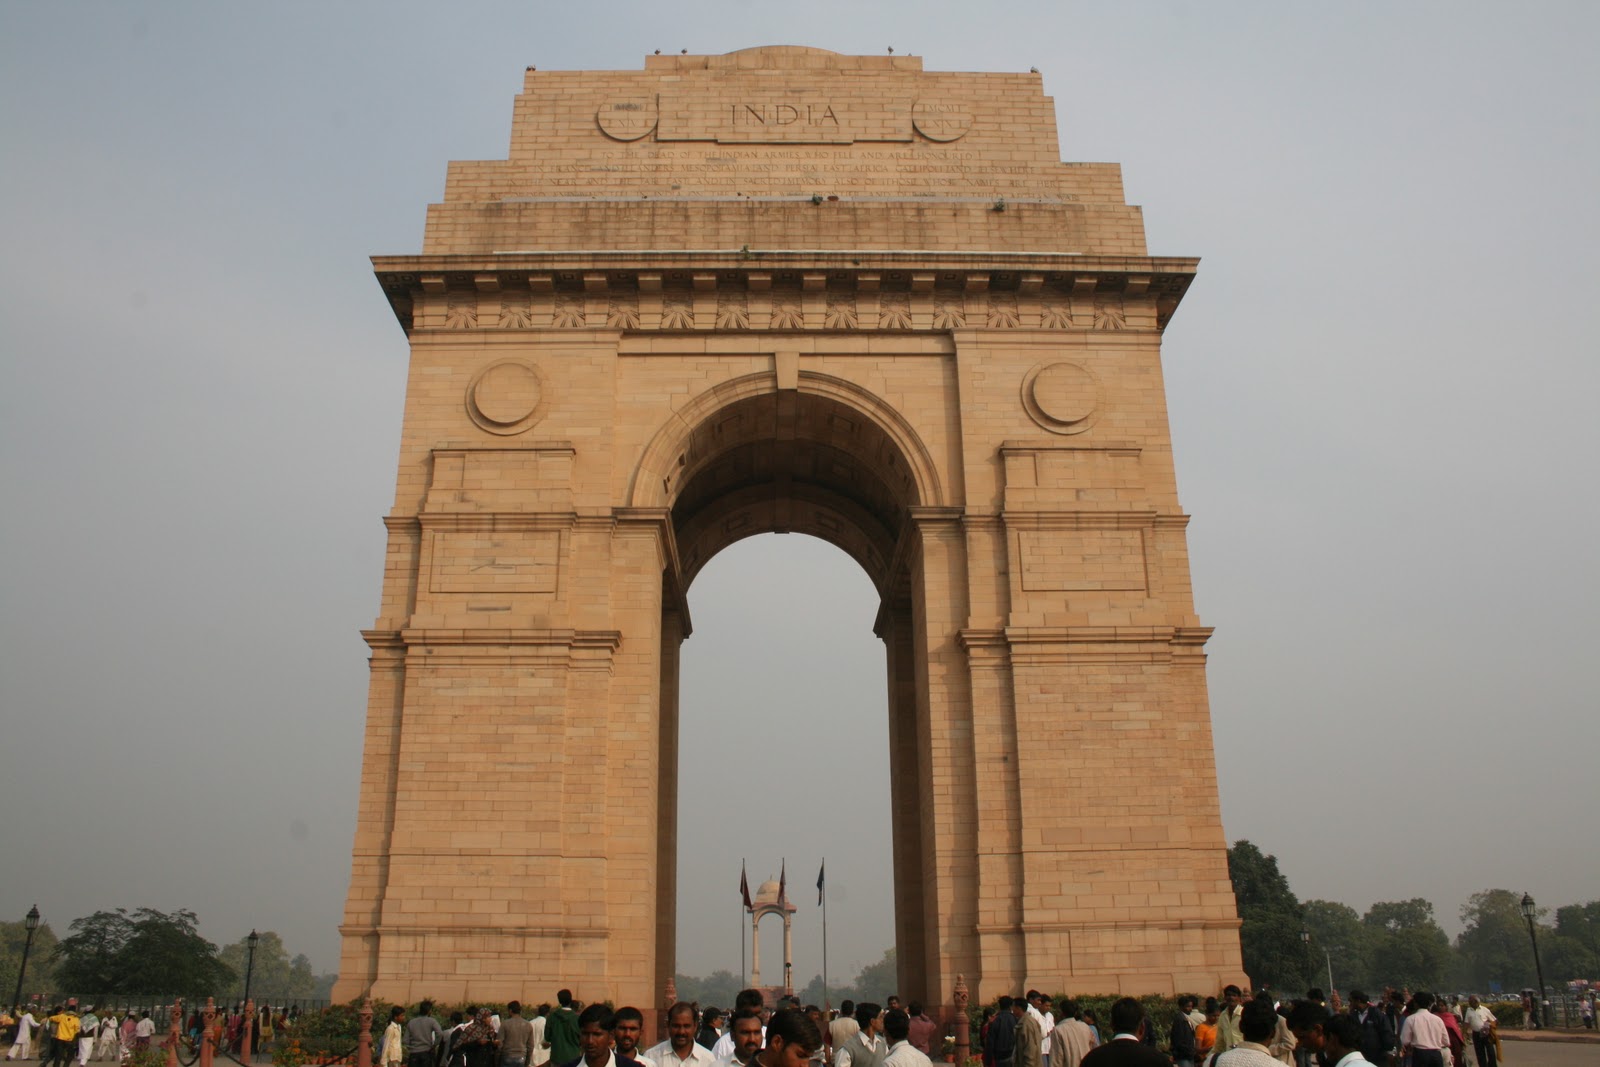 http://3.bp.blogspot.com/-KxWVxLljHt0/TudMYcibOXI/AAAAAAAAGFM/2jRxGsjAIhE/s1600/India+Gate++Delhi+Psuperos.JPG